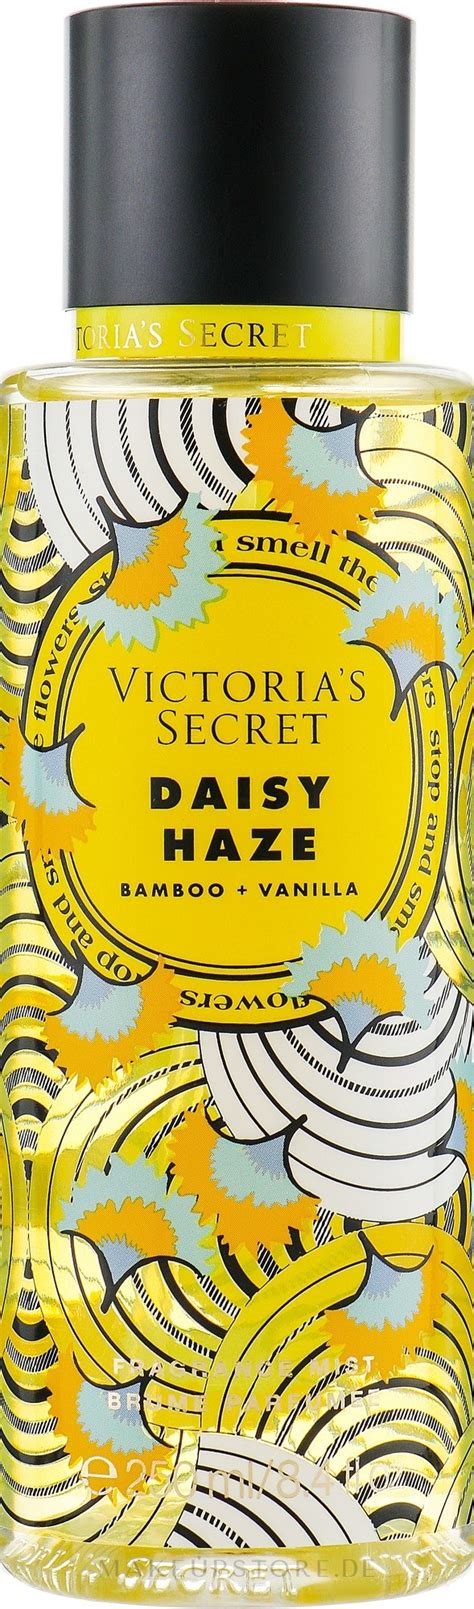 Victoria s Secret Daisy Haze Fragrance Mist Körperspray Bamboo Vanilla Makeupstore de